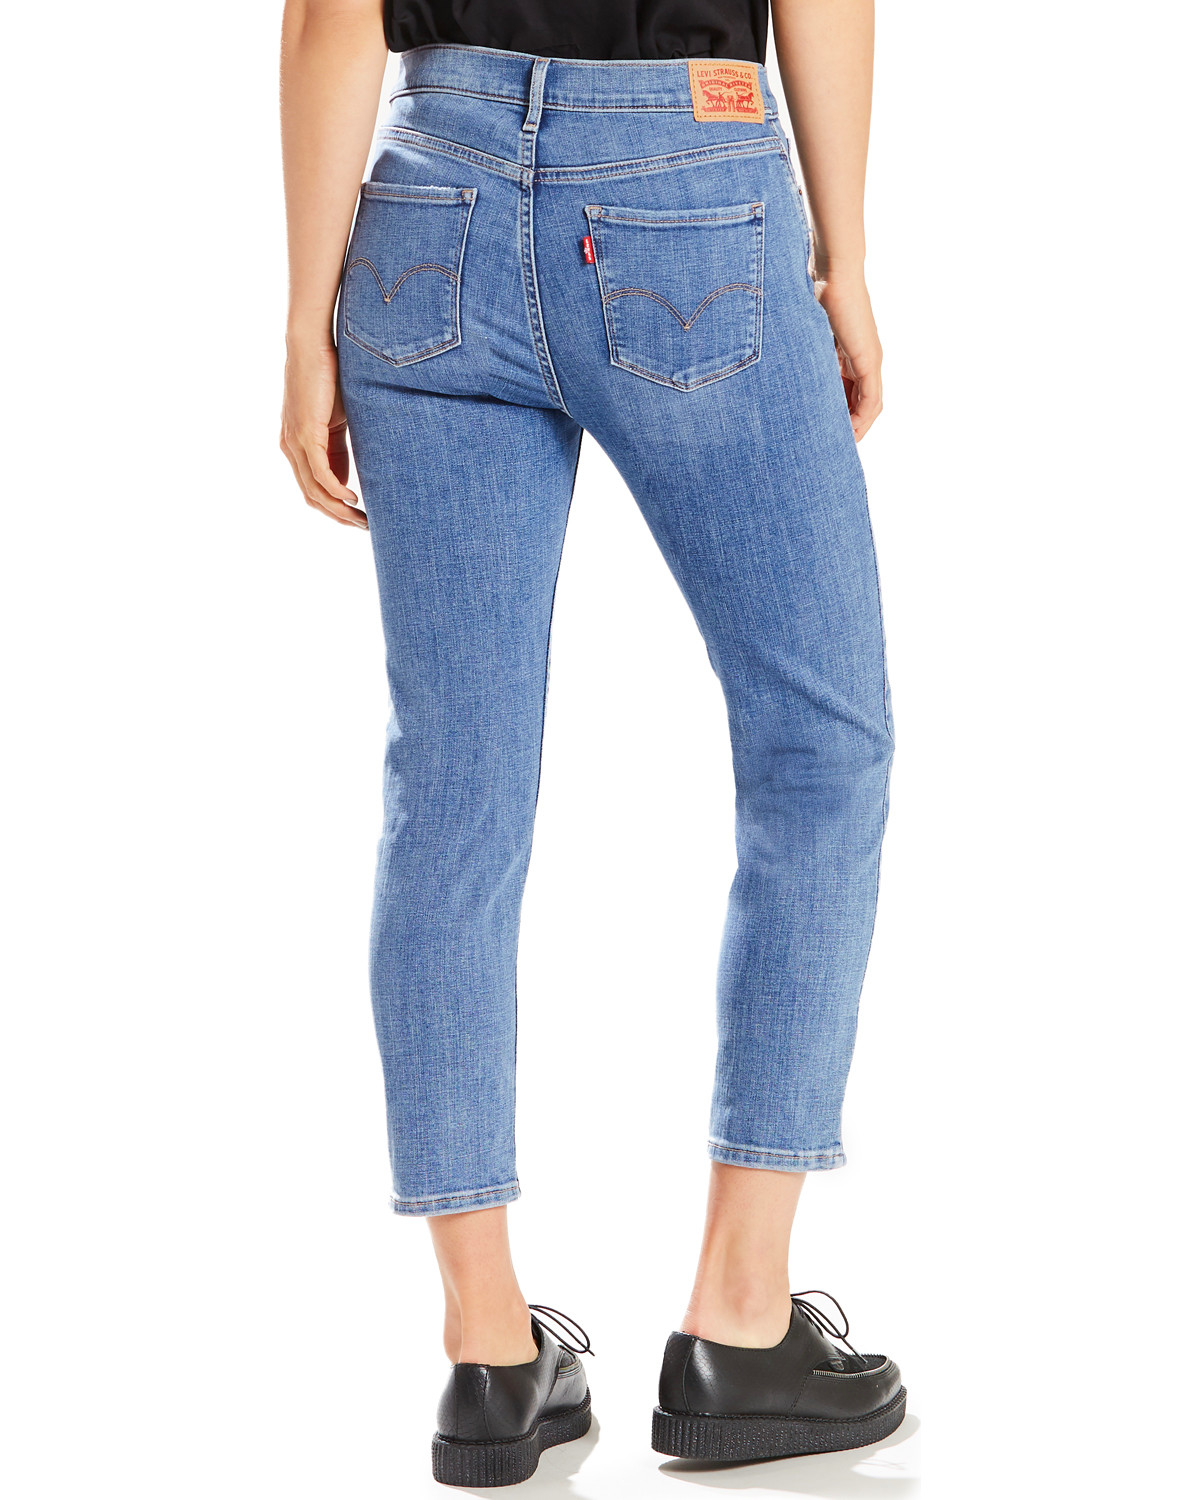 levis jeans for ladies price